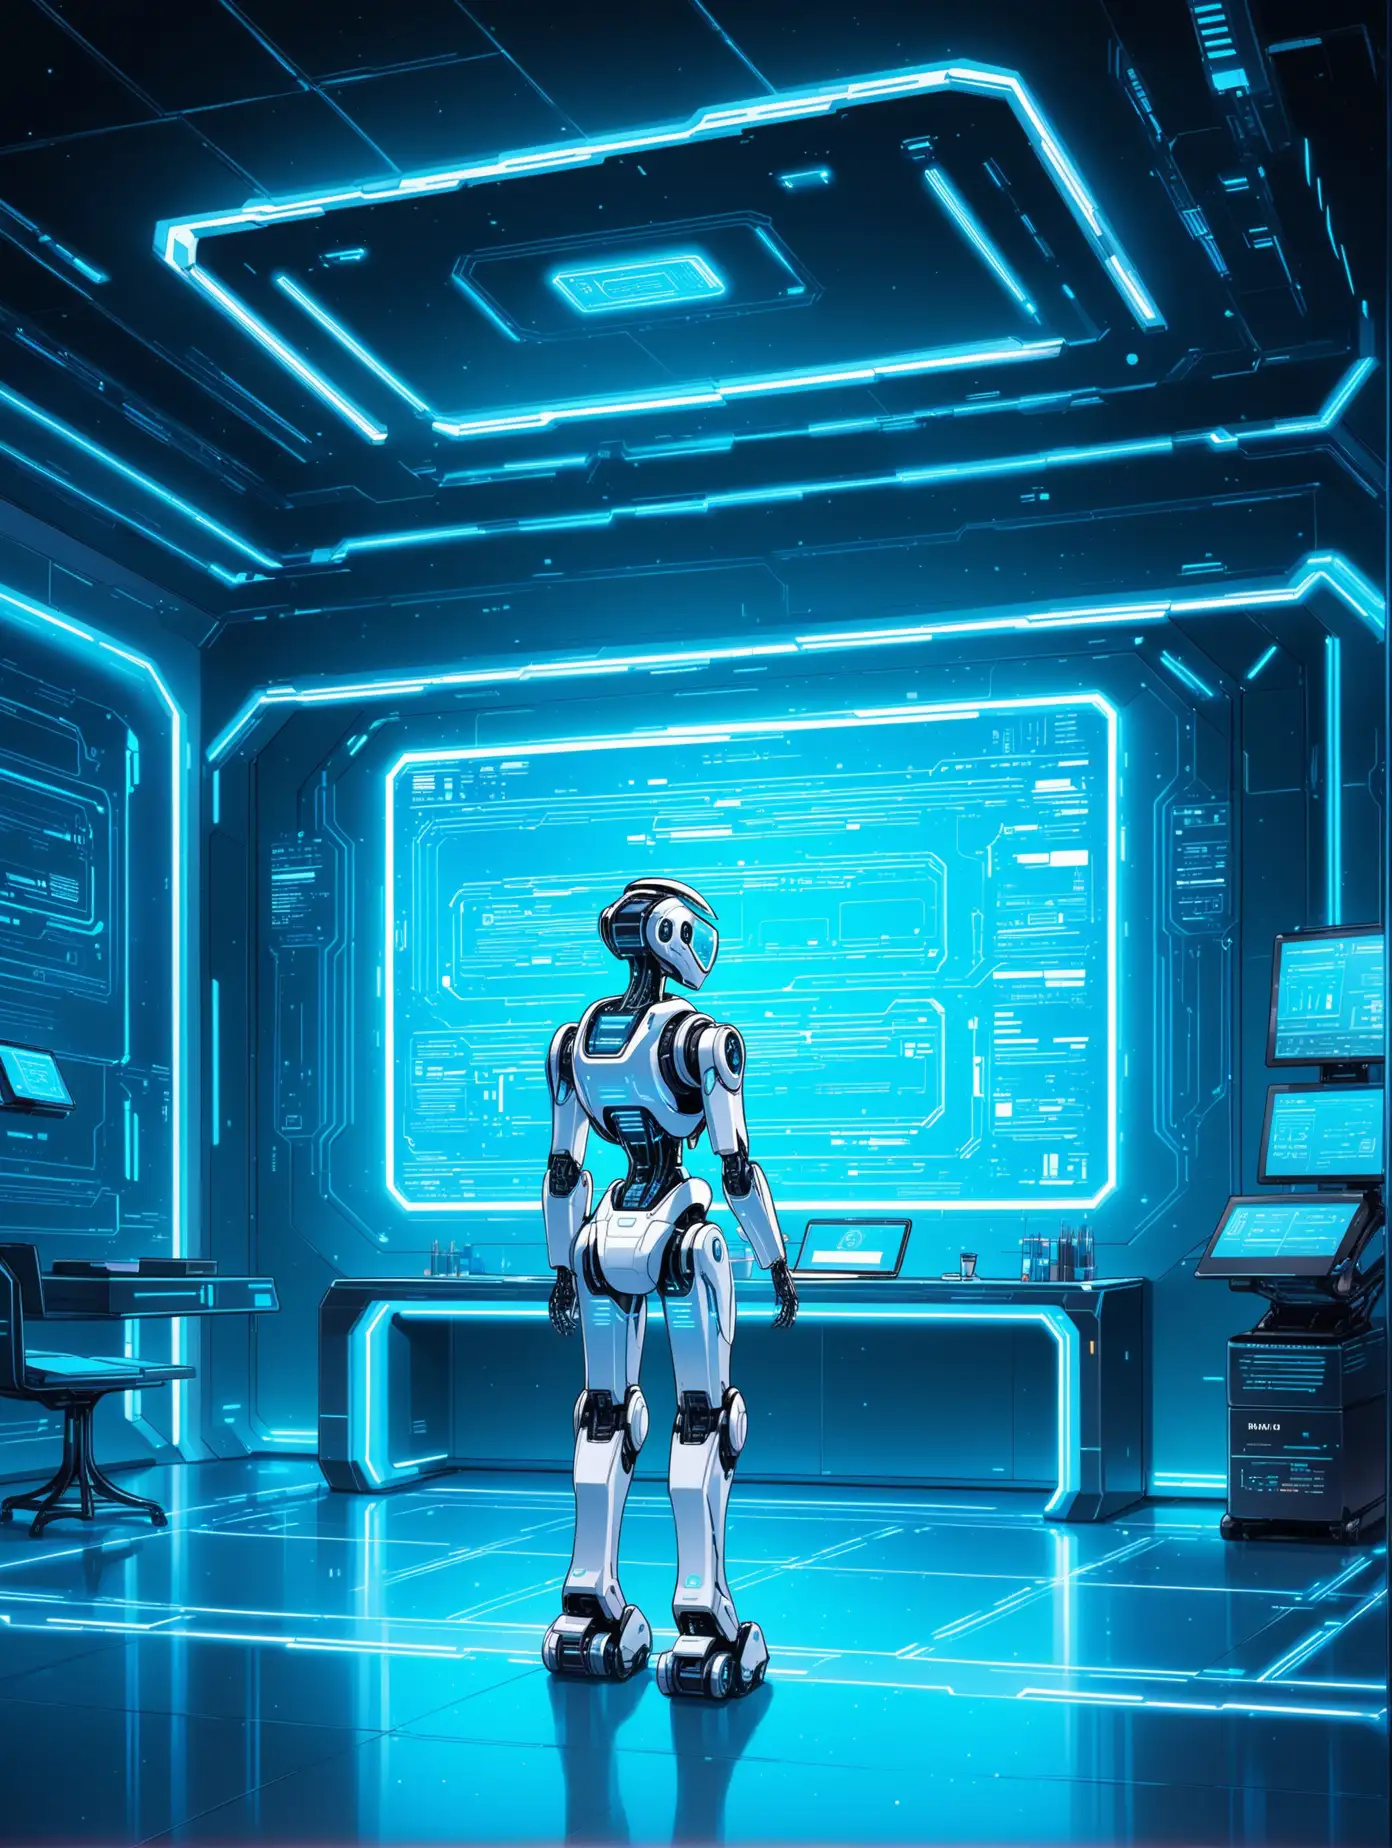 Futuristic AI Robot Engaged in Documentation Amidst Cool Blue LEDlit Room